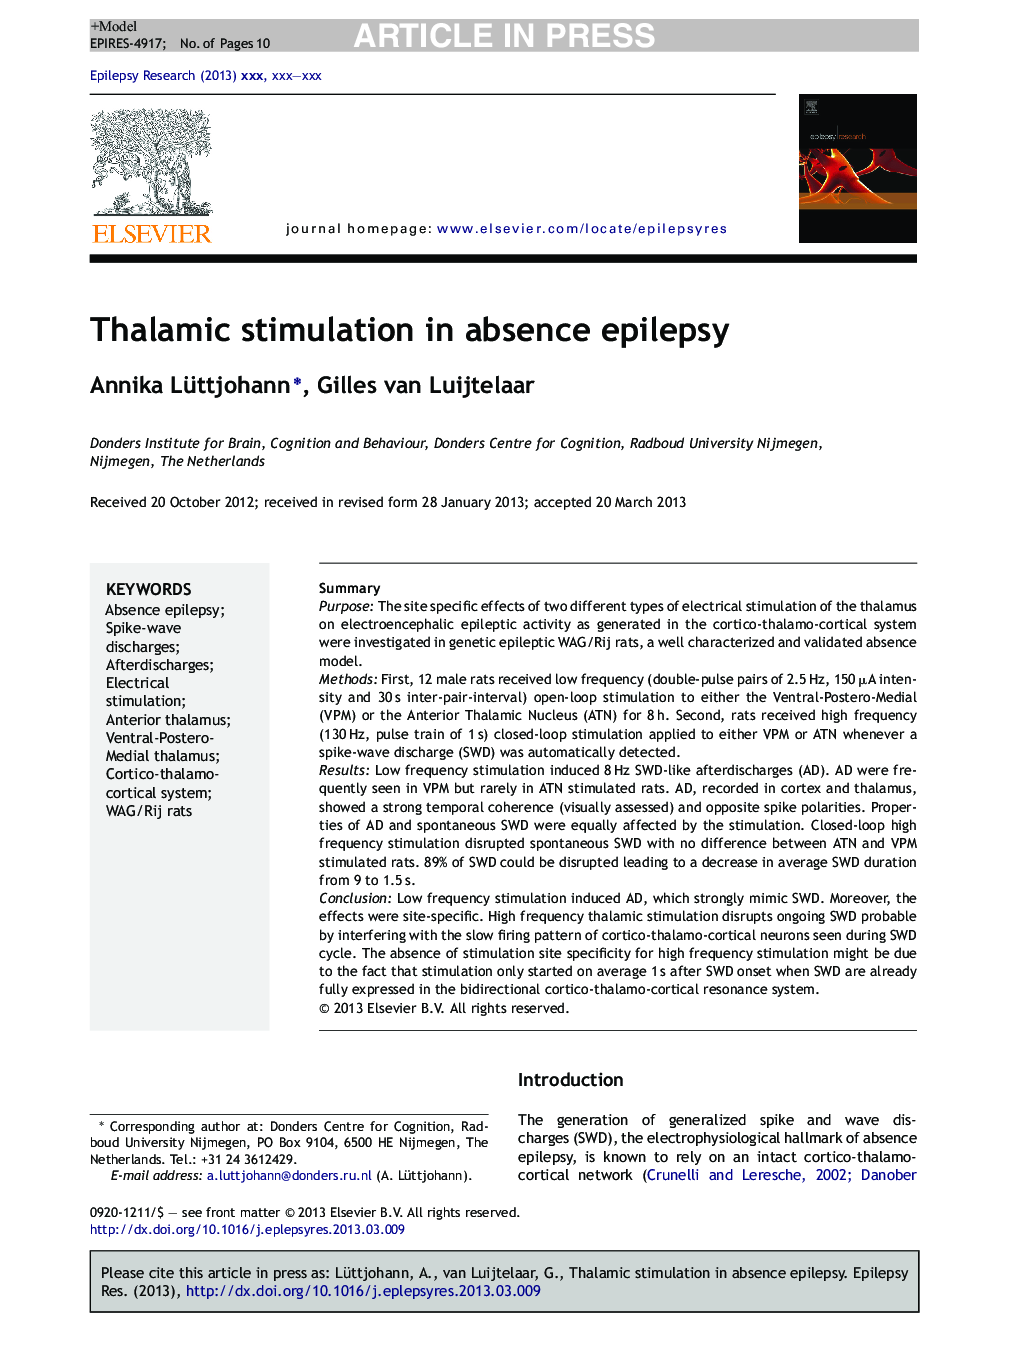 Thalamic stimulation in absence epilepsy